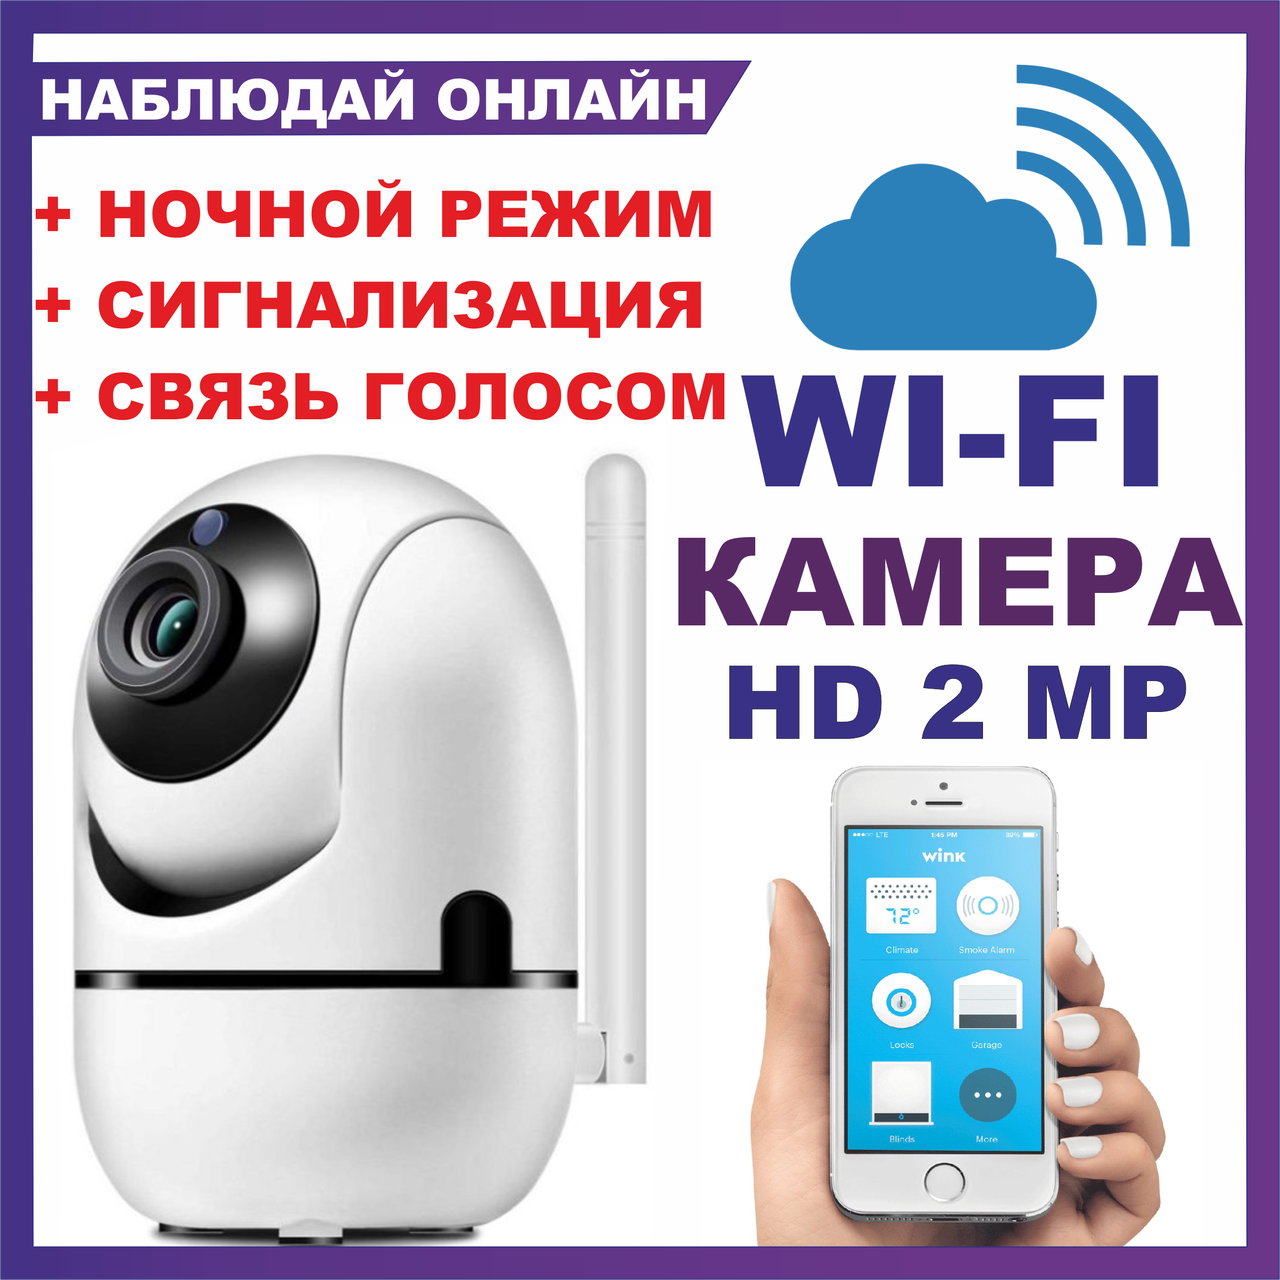 IP WiFi Камера видеонаблюдения Full HD 1080P, беспроводная камера, видео няня, сигнализация, ночная камера